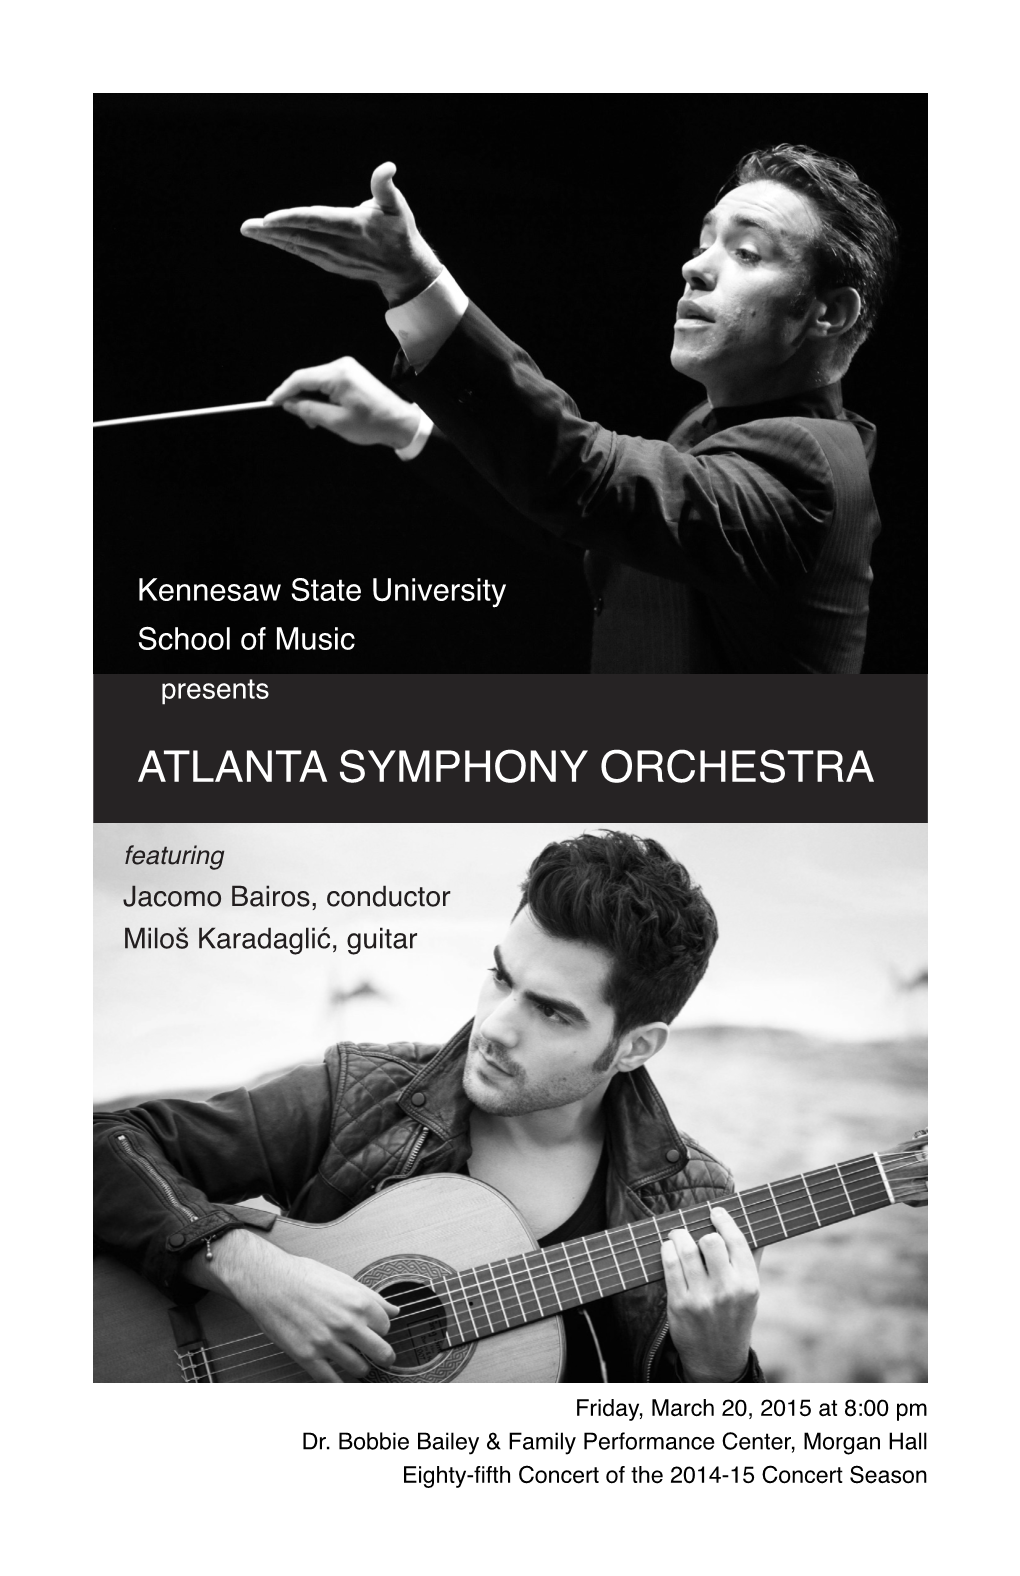 Atlanta Symphony Orchestra Featuring Jacomo Bairos, Conductor and Miloå